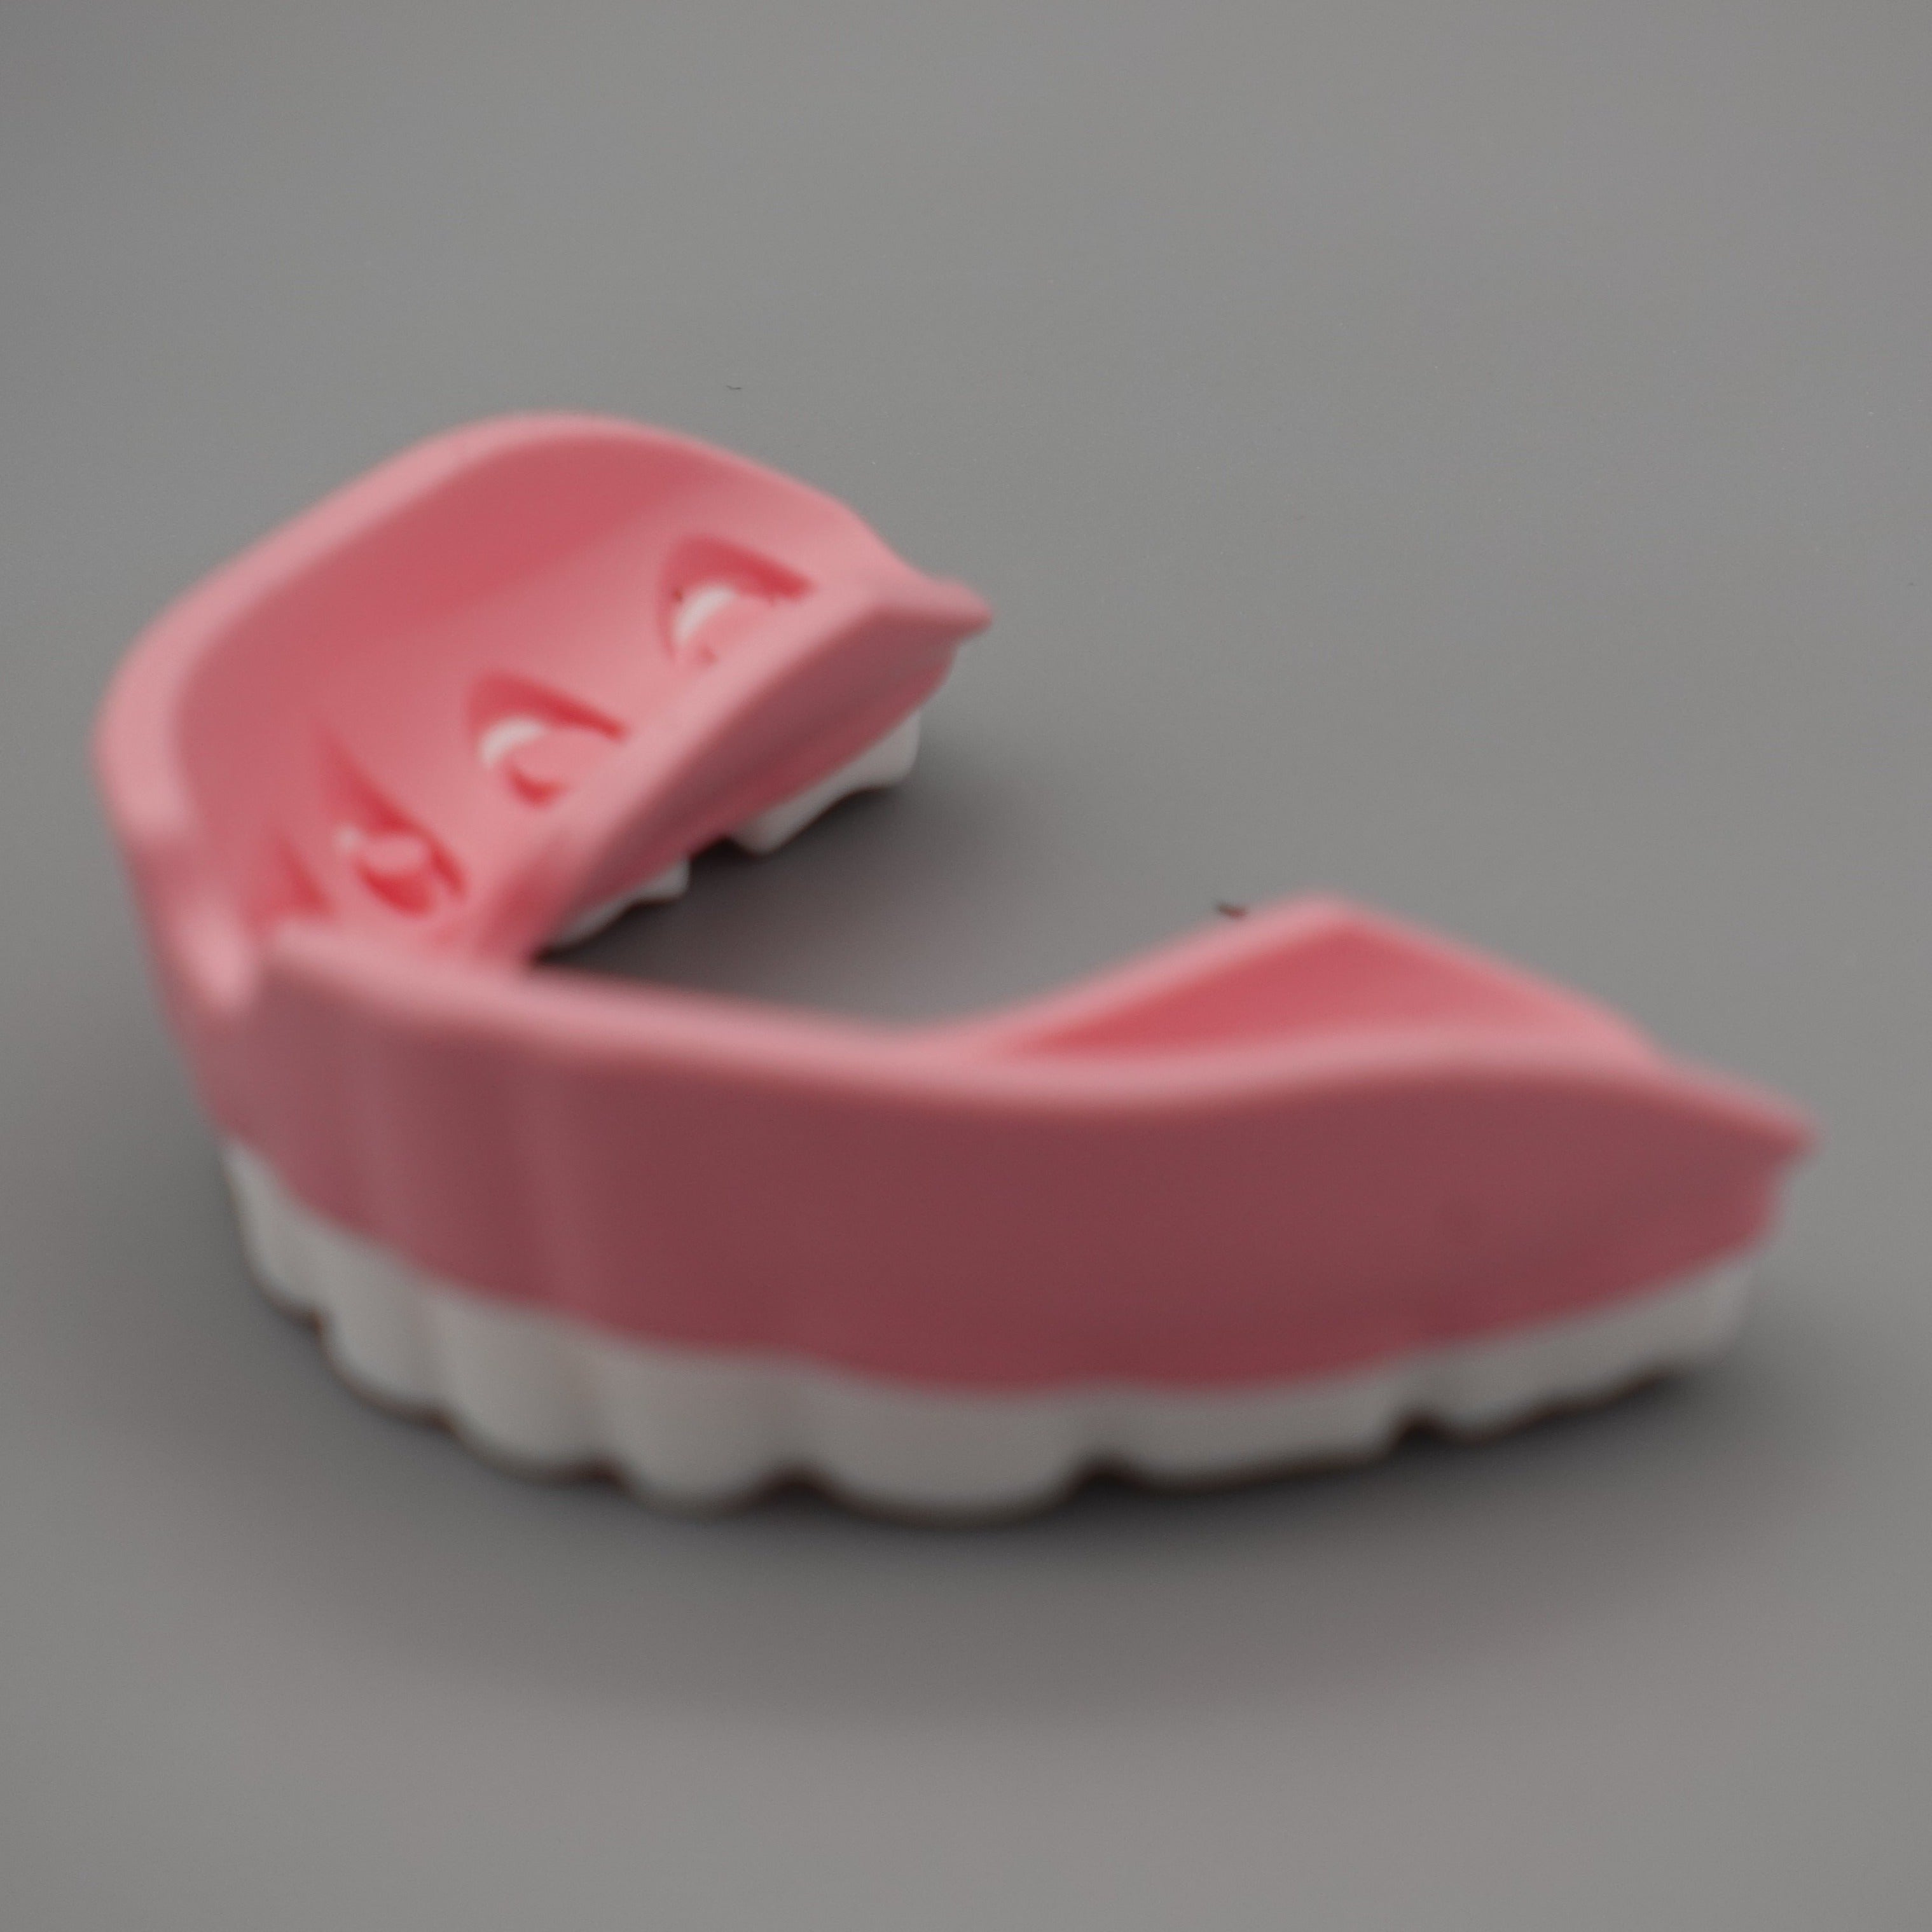 GumGuard®PRO  Lower | Realistic Looking gums and teeth